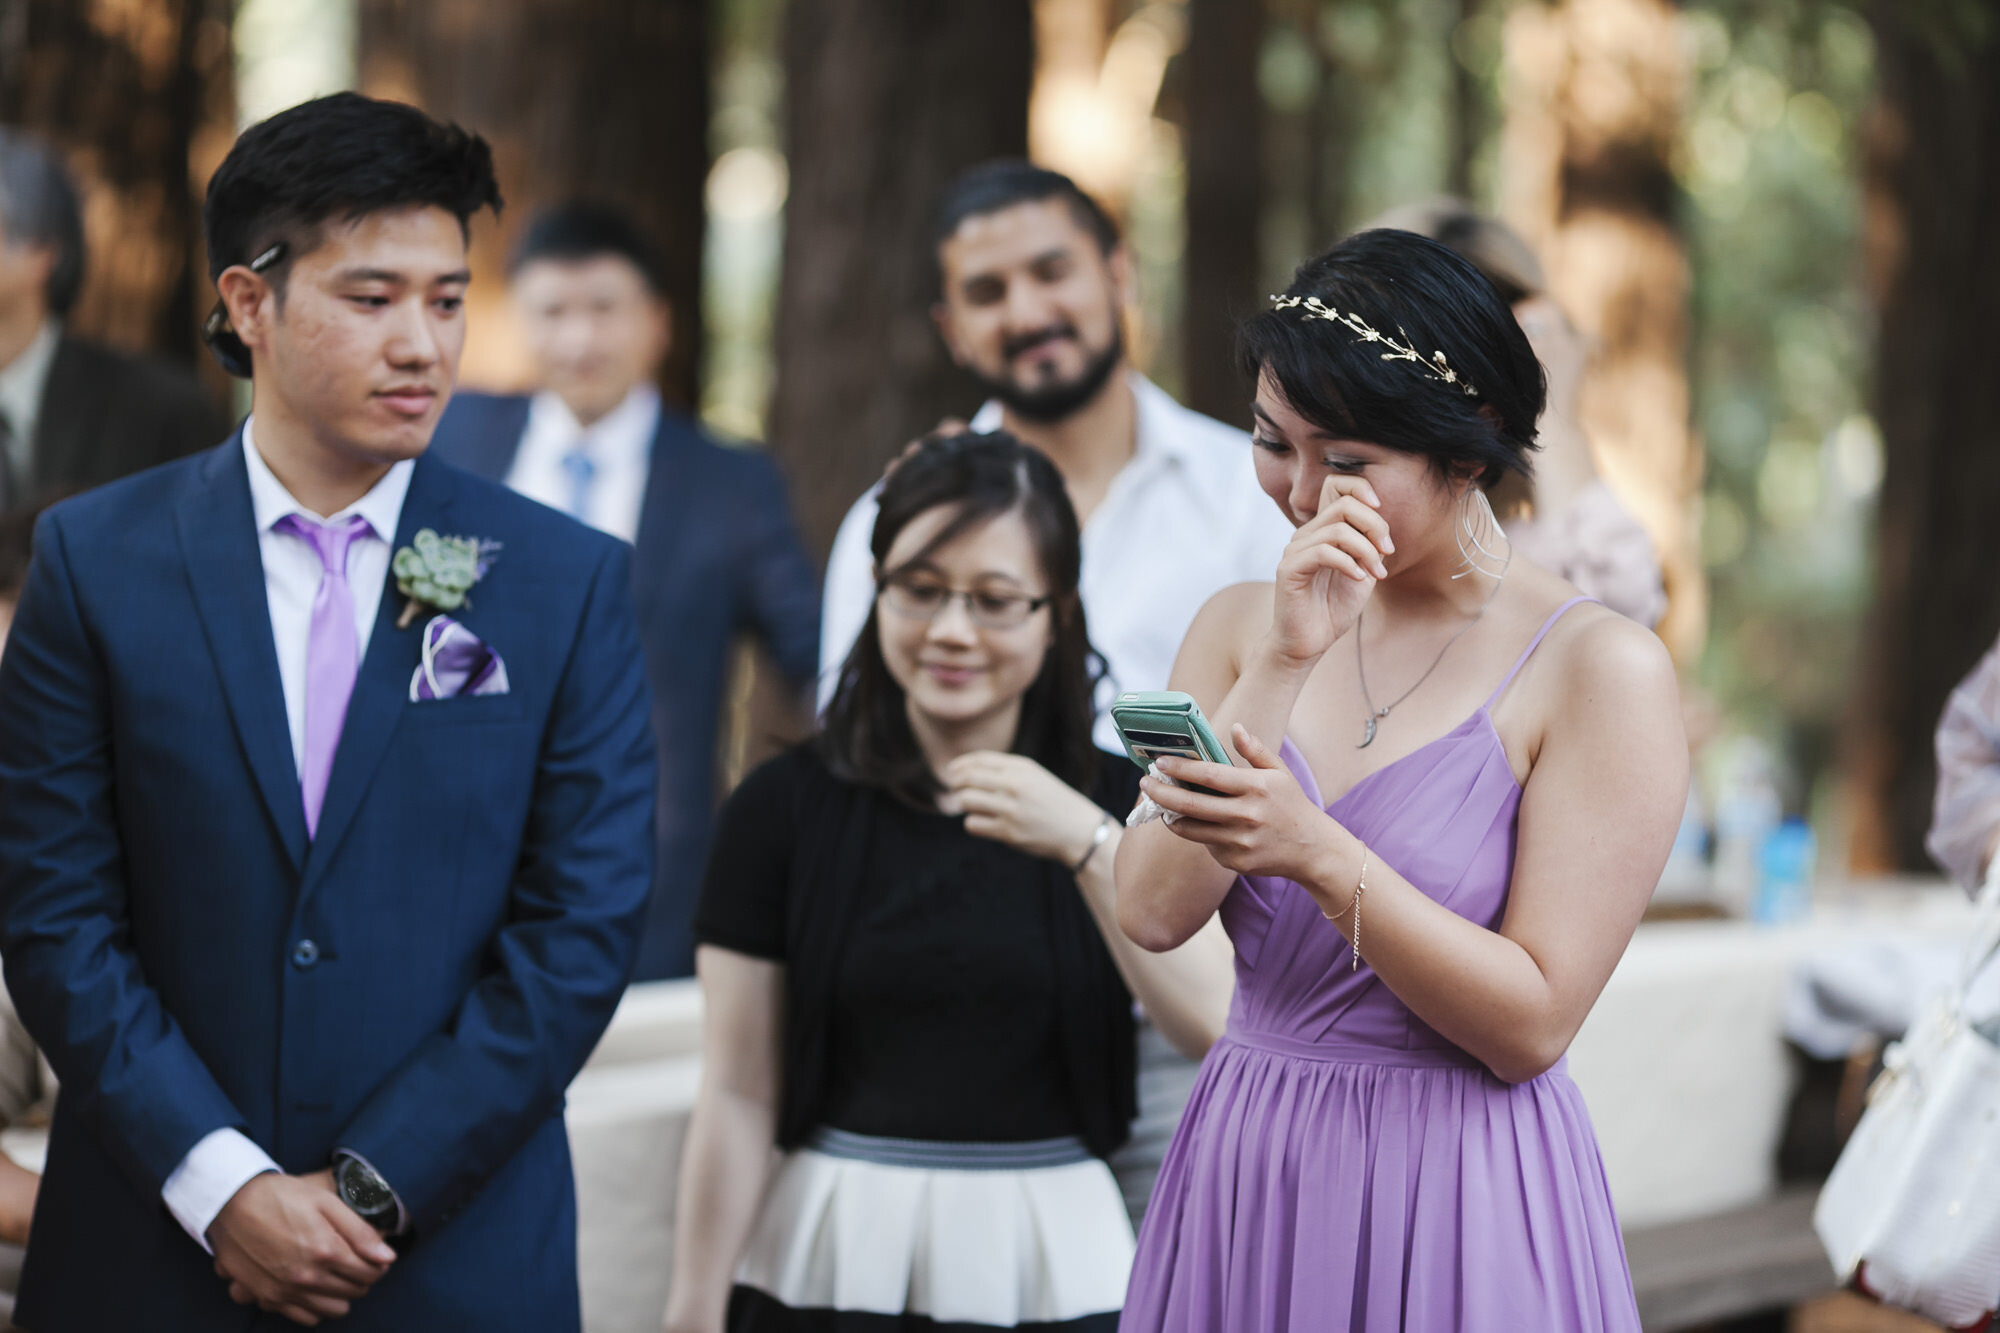 Bridesmaid gives tearful wedding speech